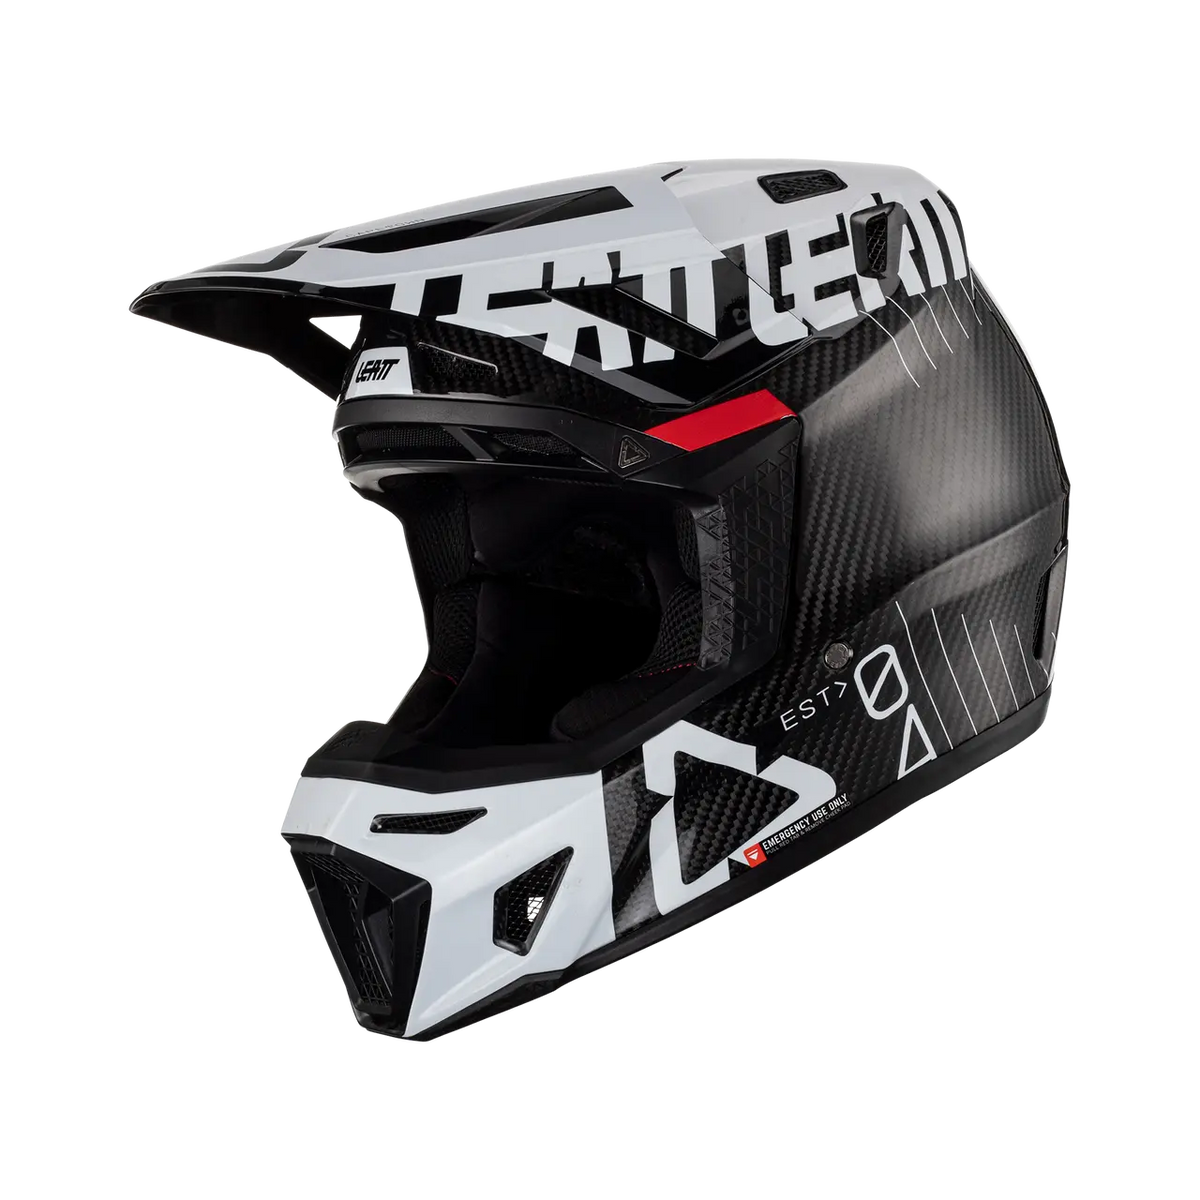 LEATT Helmet Kit Moto 9.5 Carbon with 6.5 IRIZ goggle